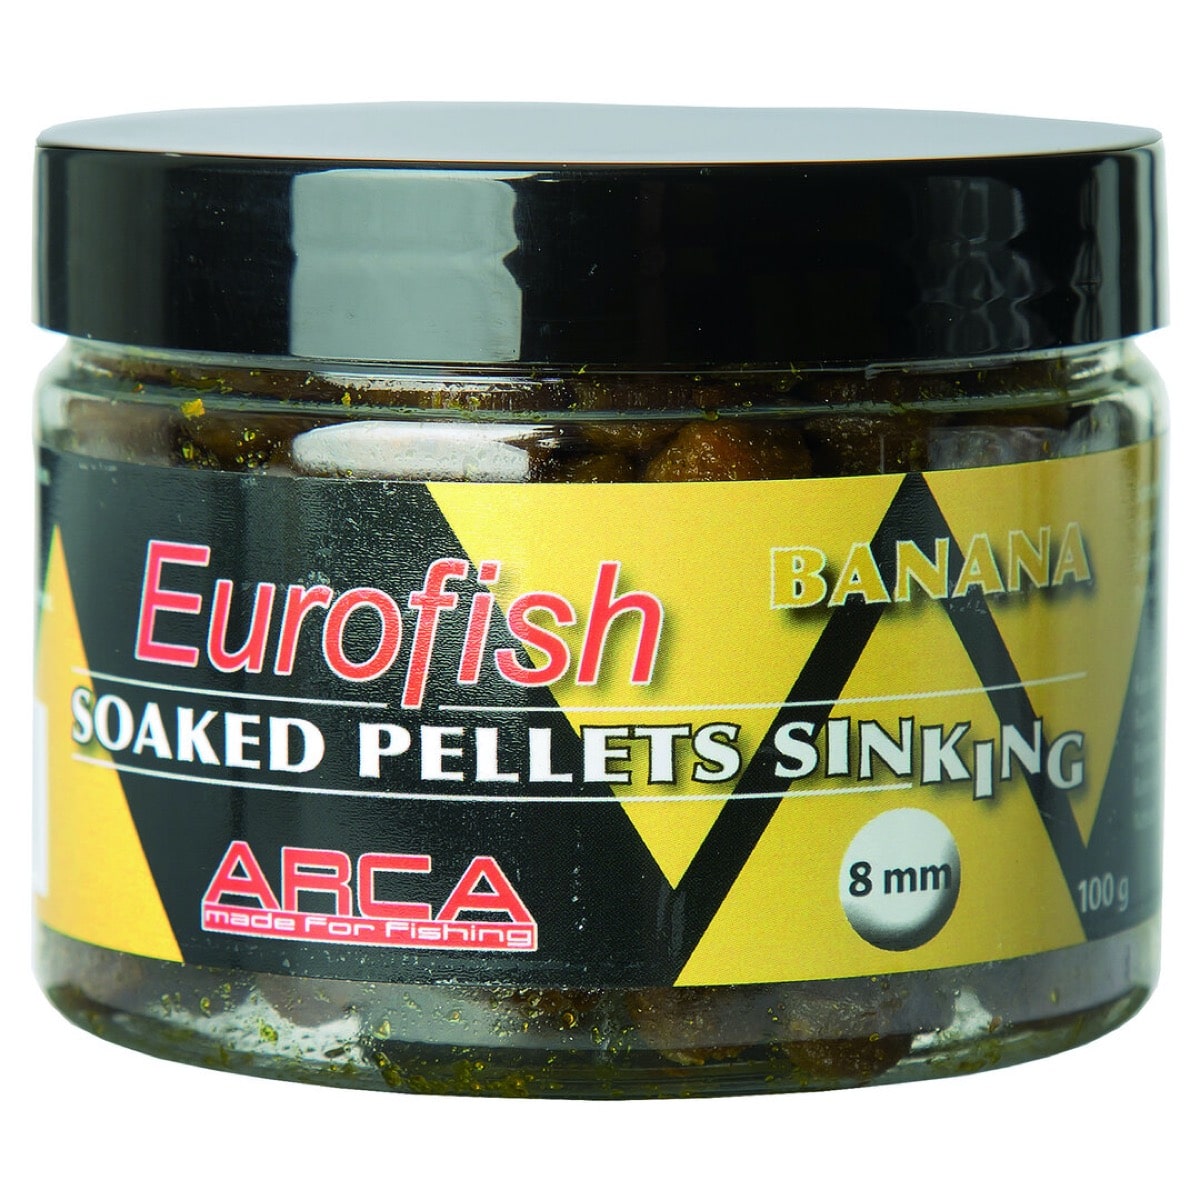 Eurofish soaked pellets sinking 8mm banana